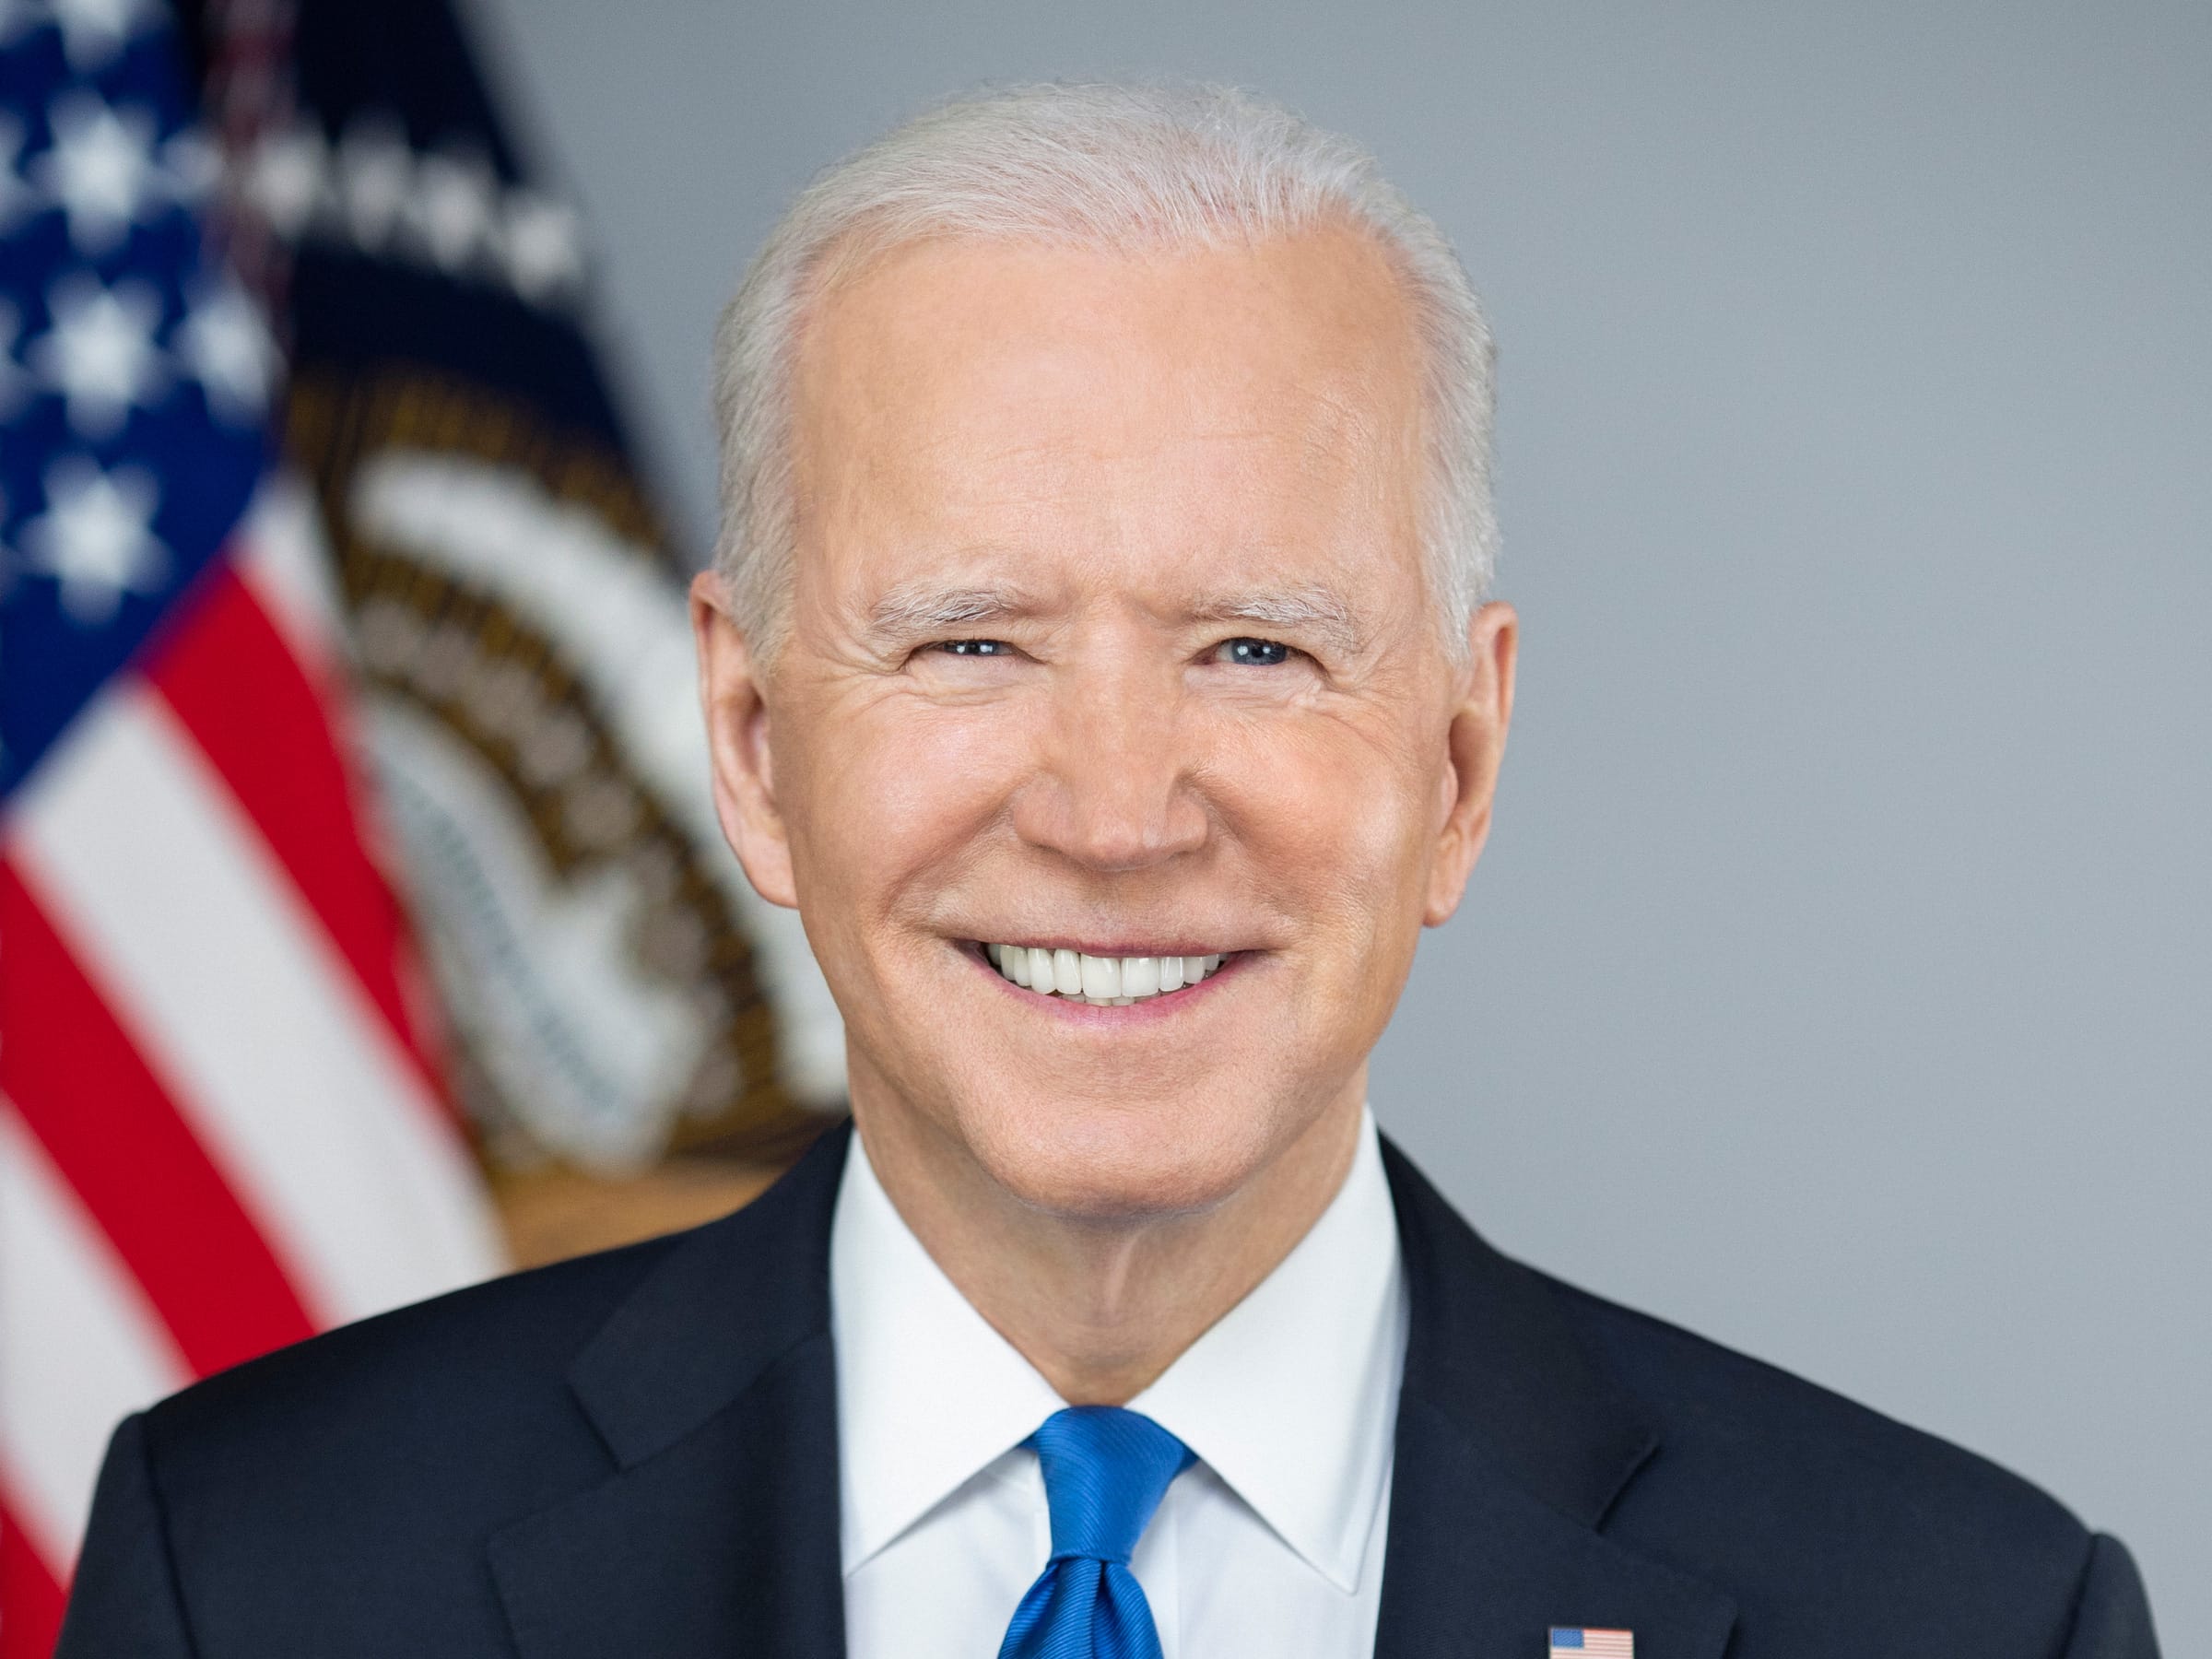 Joe Biden: The President